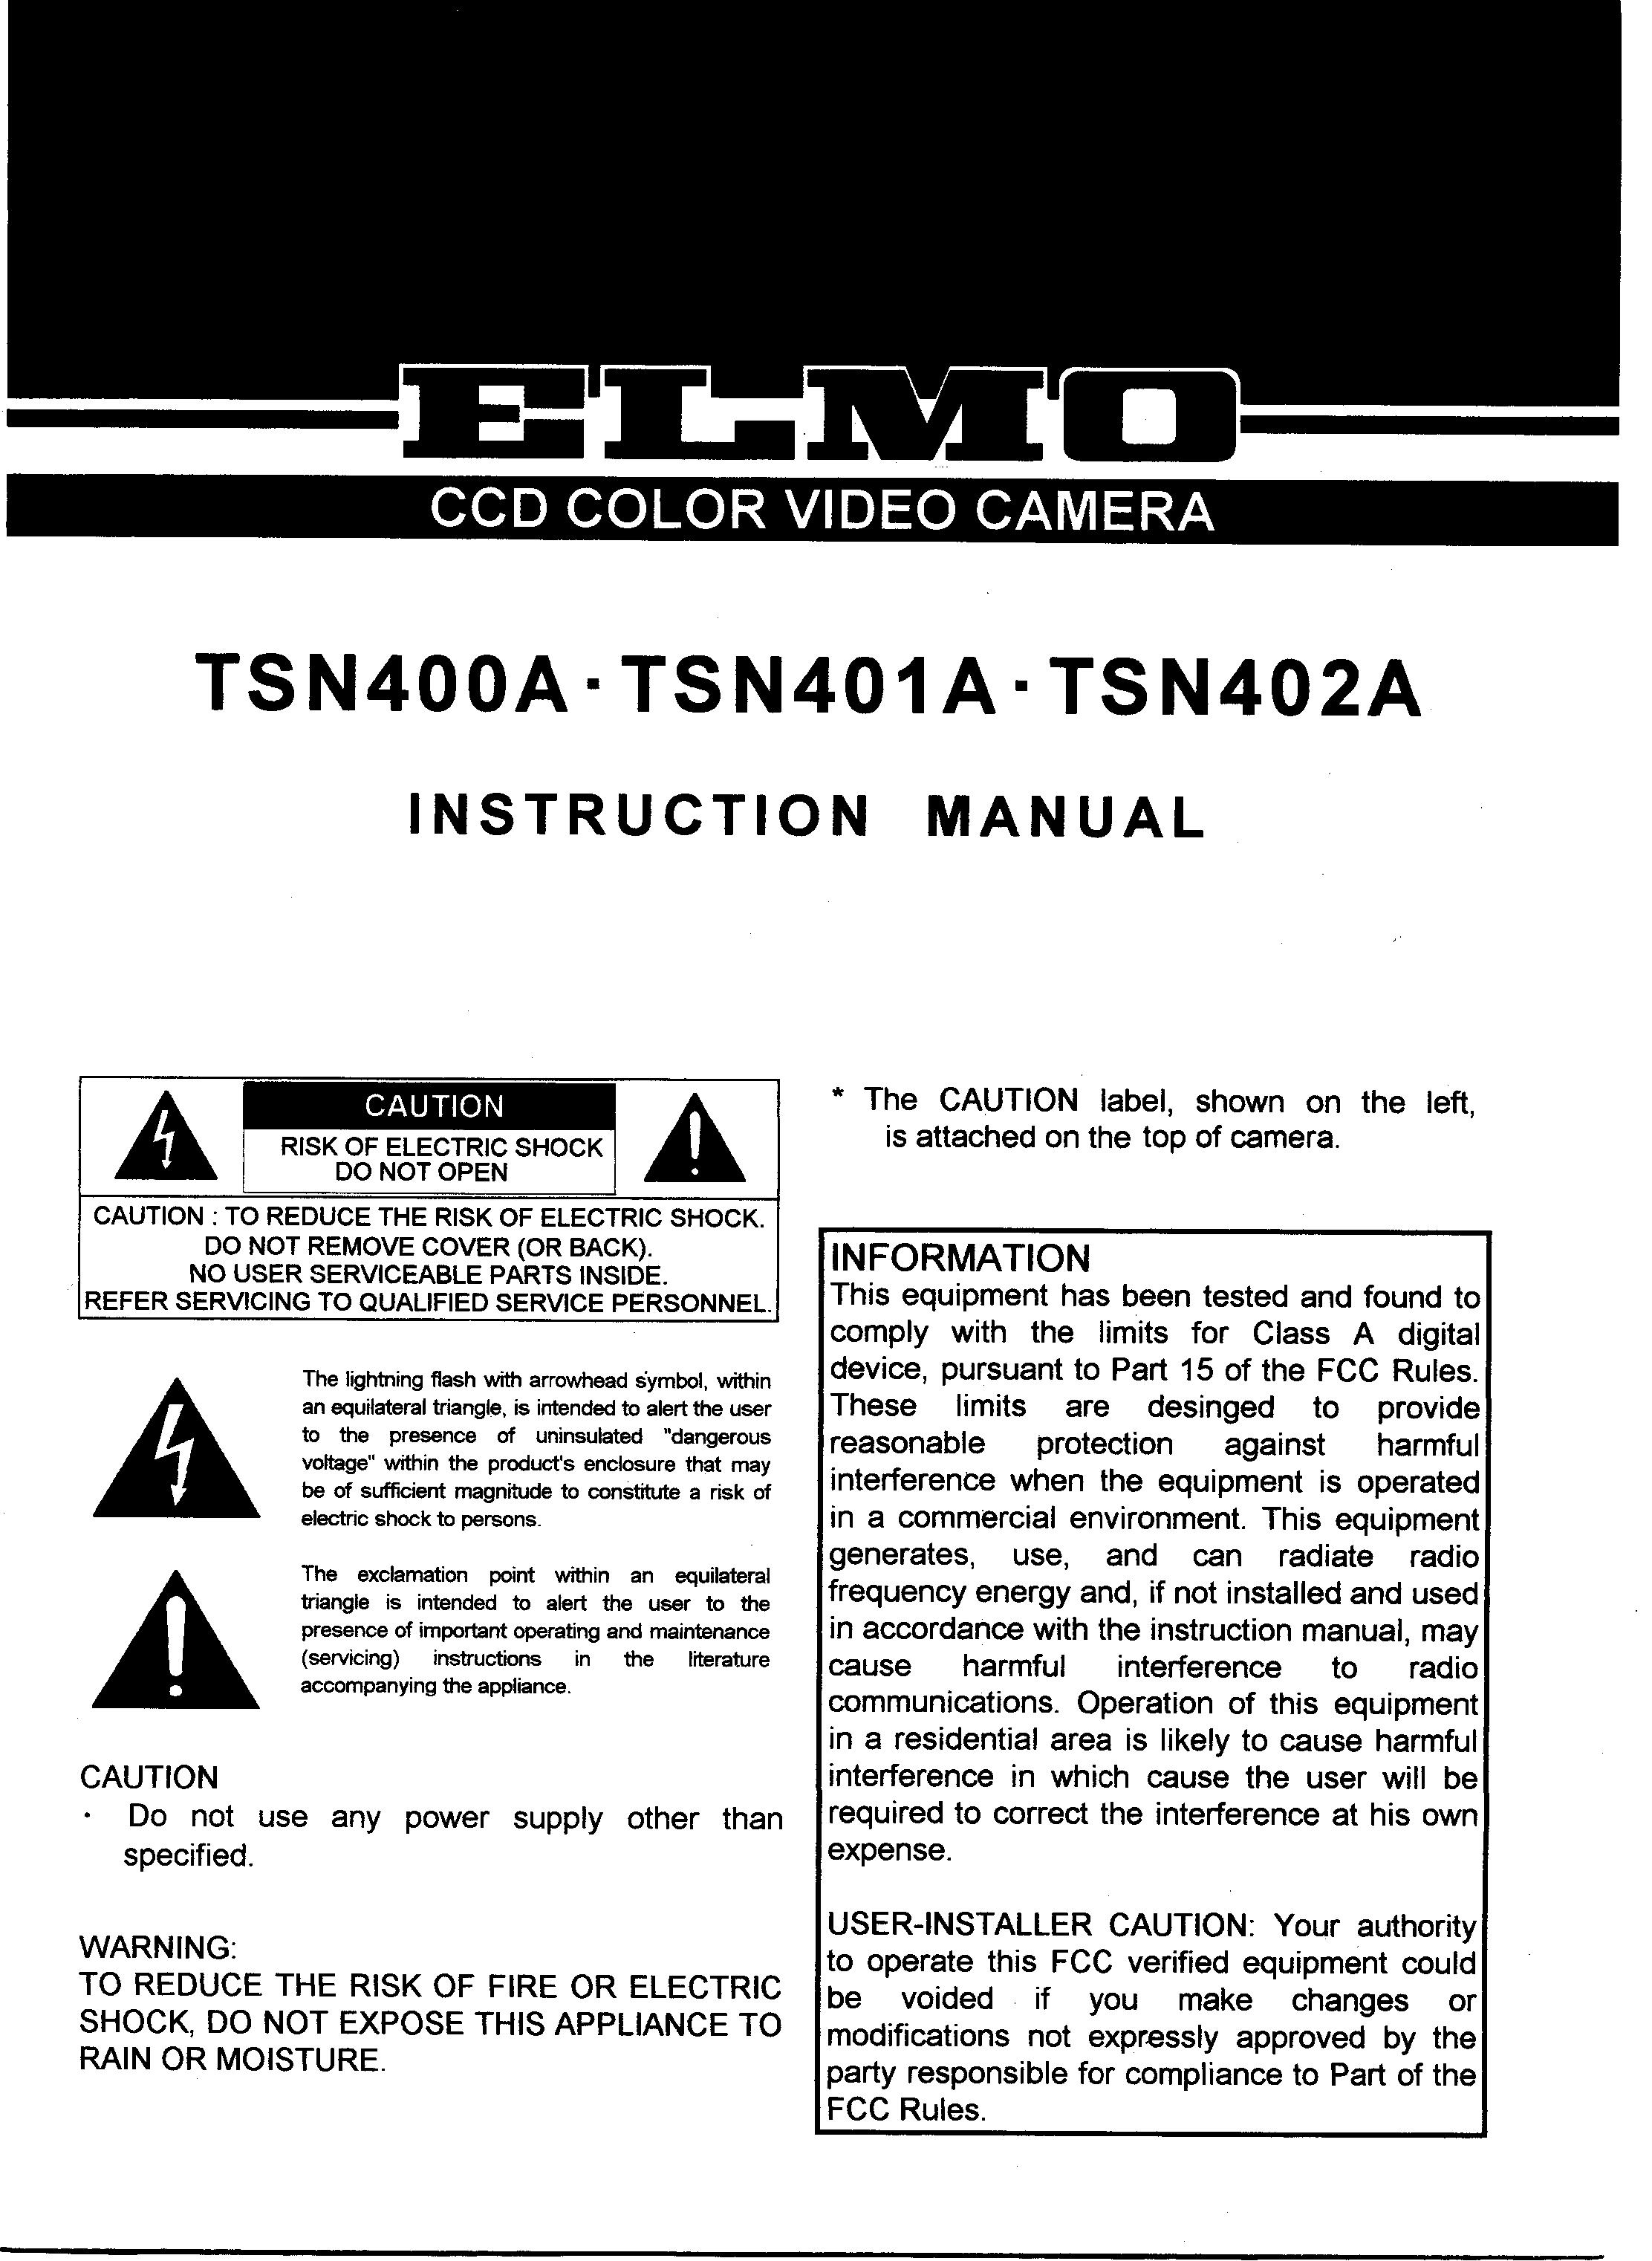 Elmo TSN401A Digital Camera User Manual